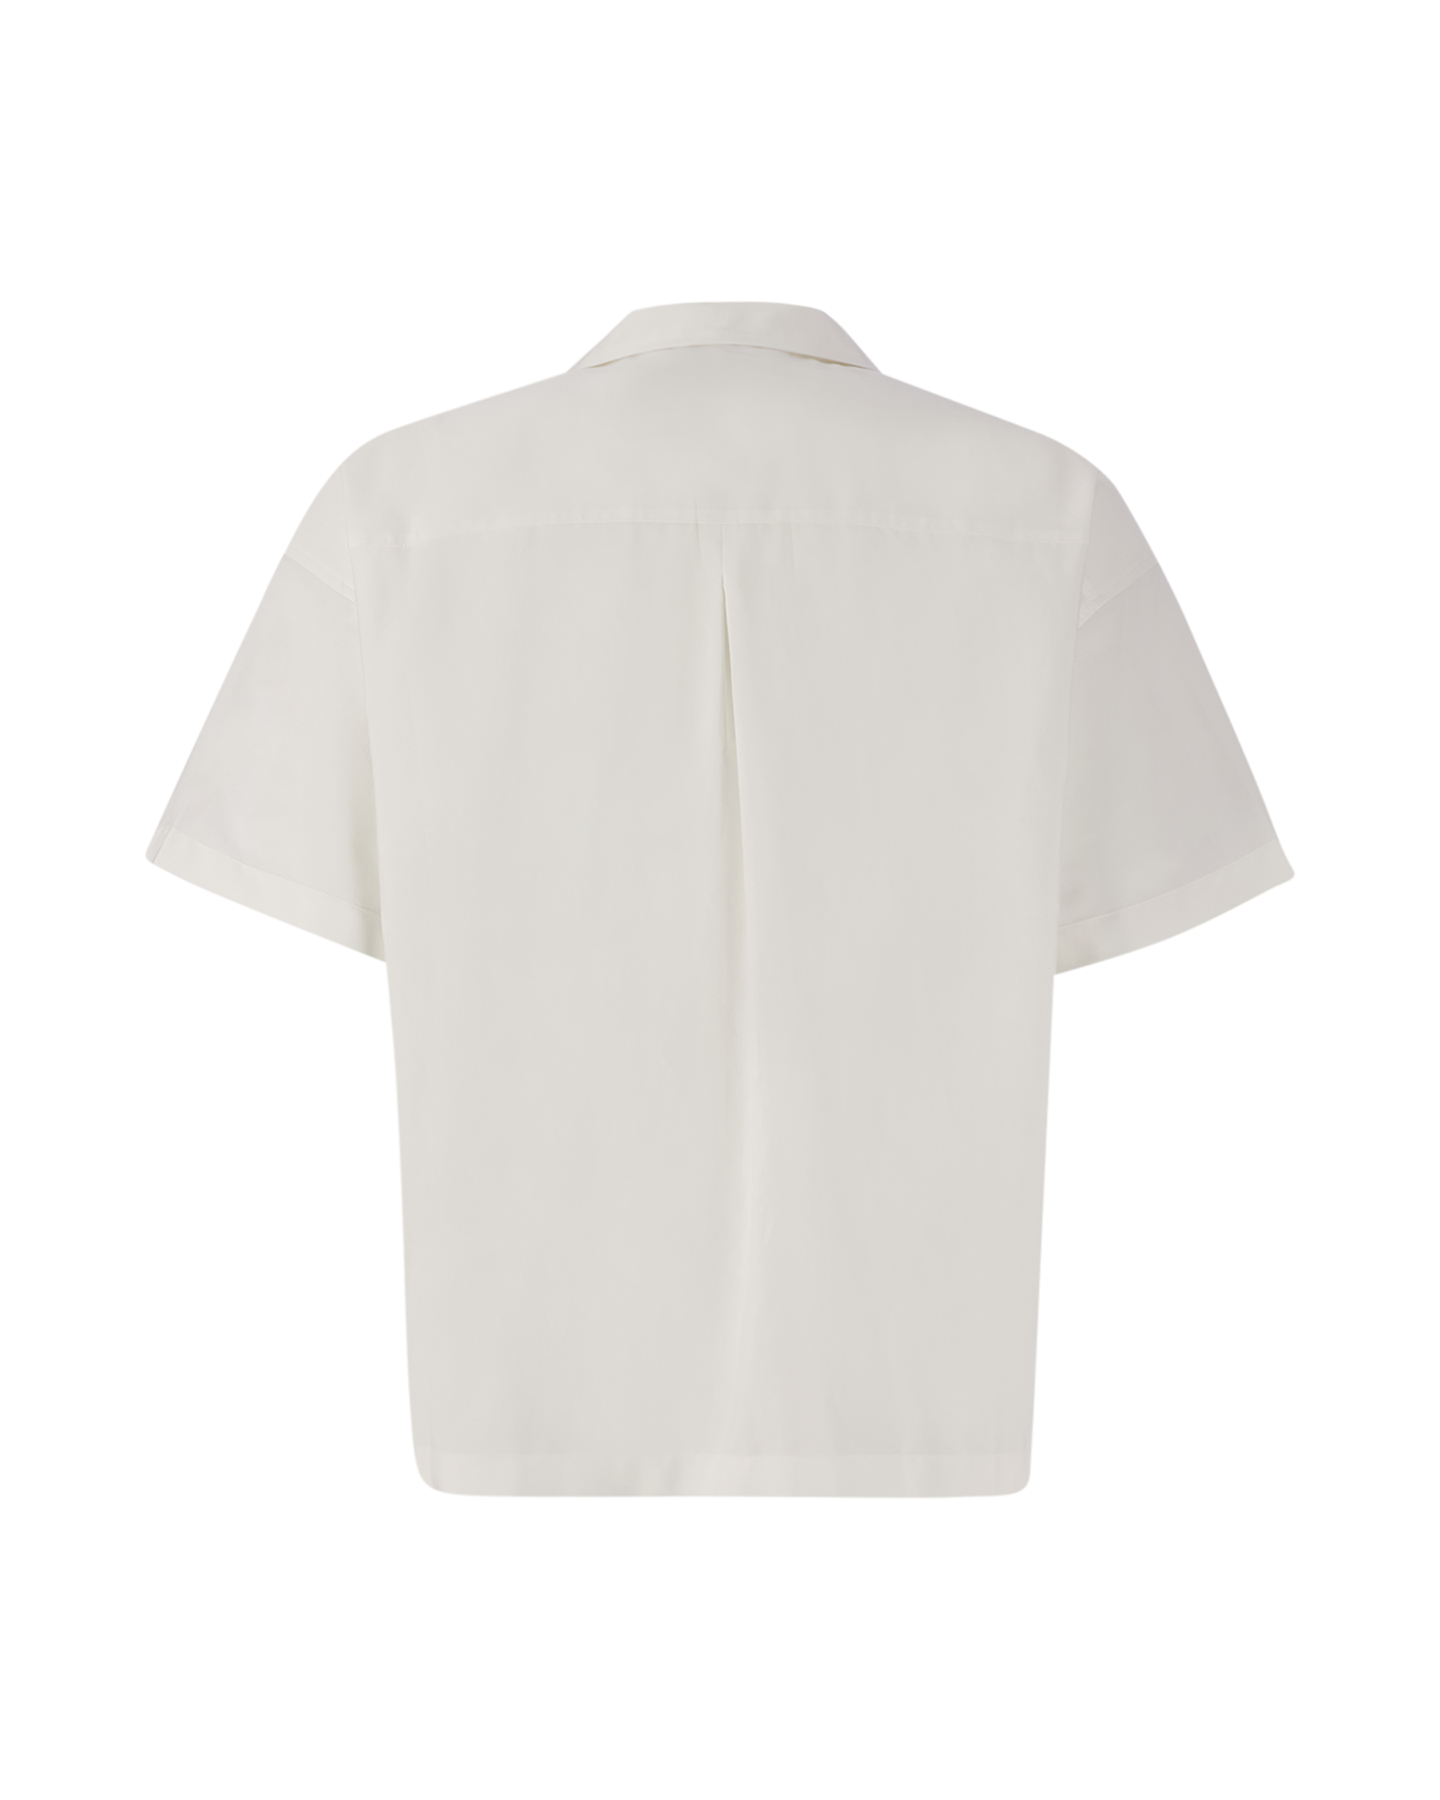 New Amsterdam Surf Association Wijk Shirt White WIT 2